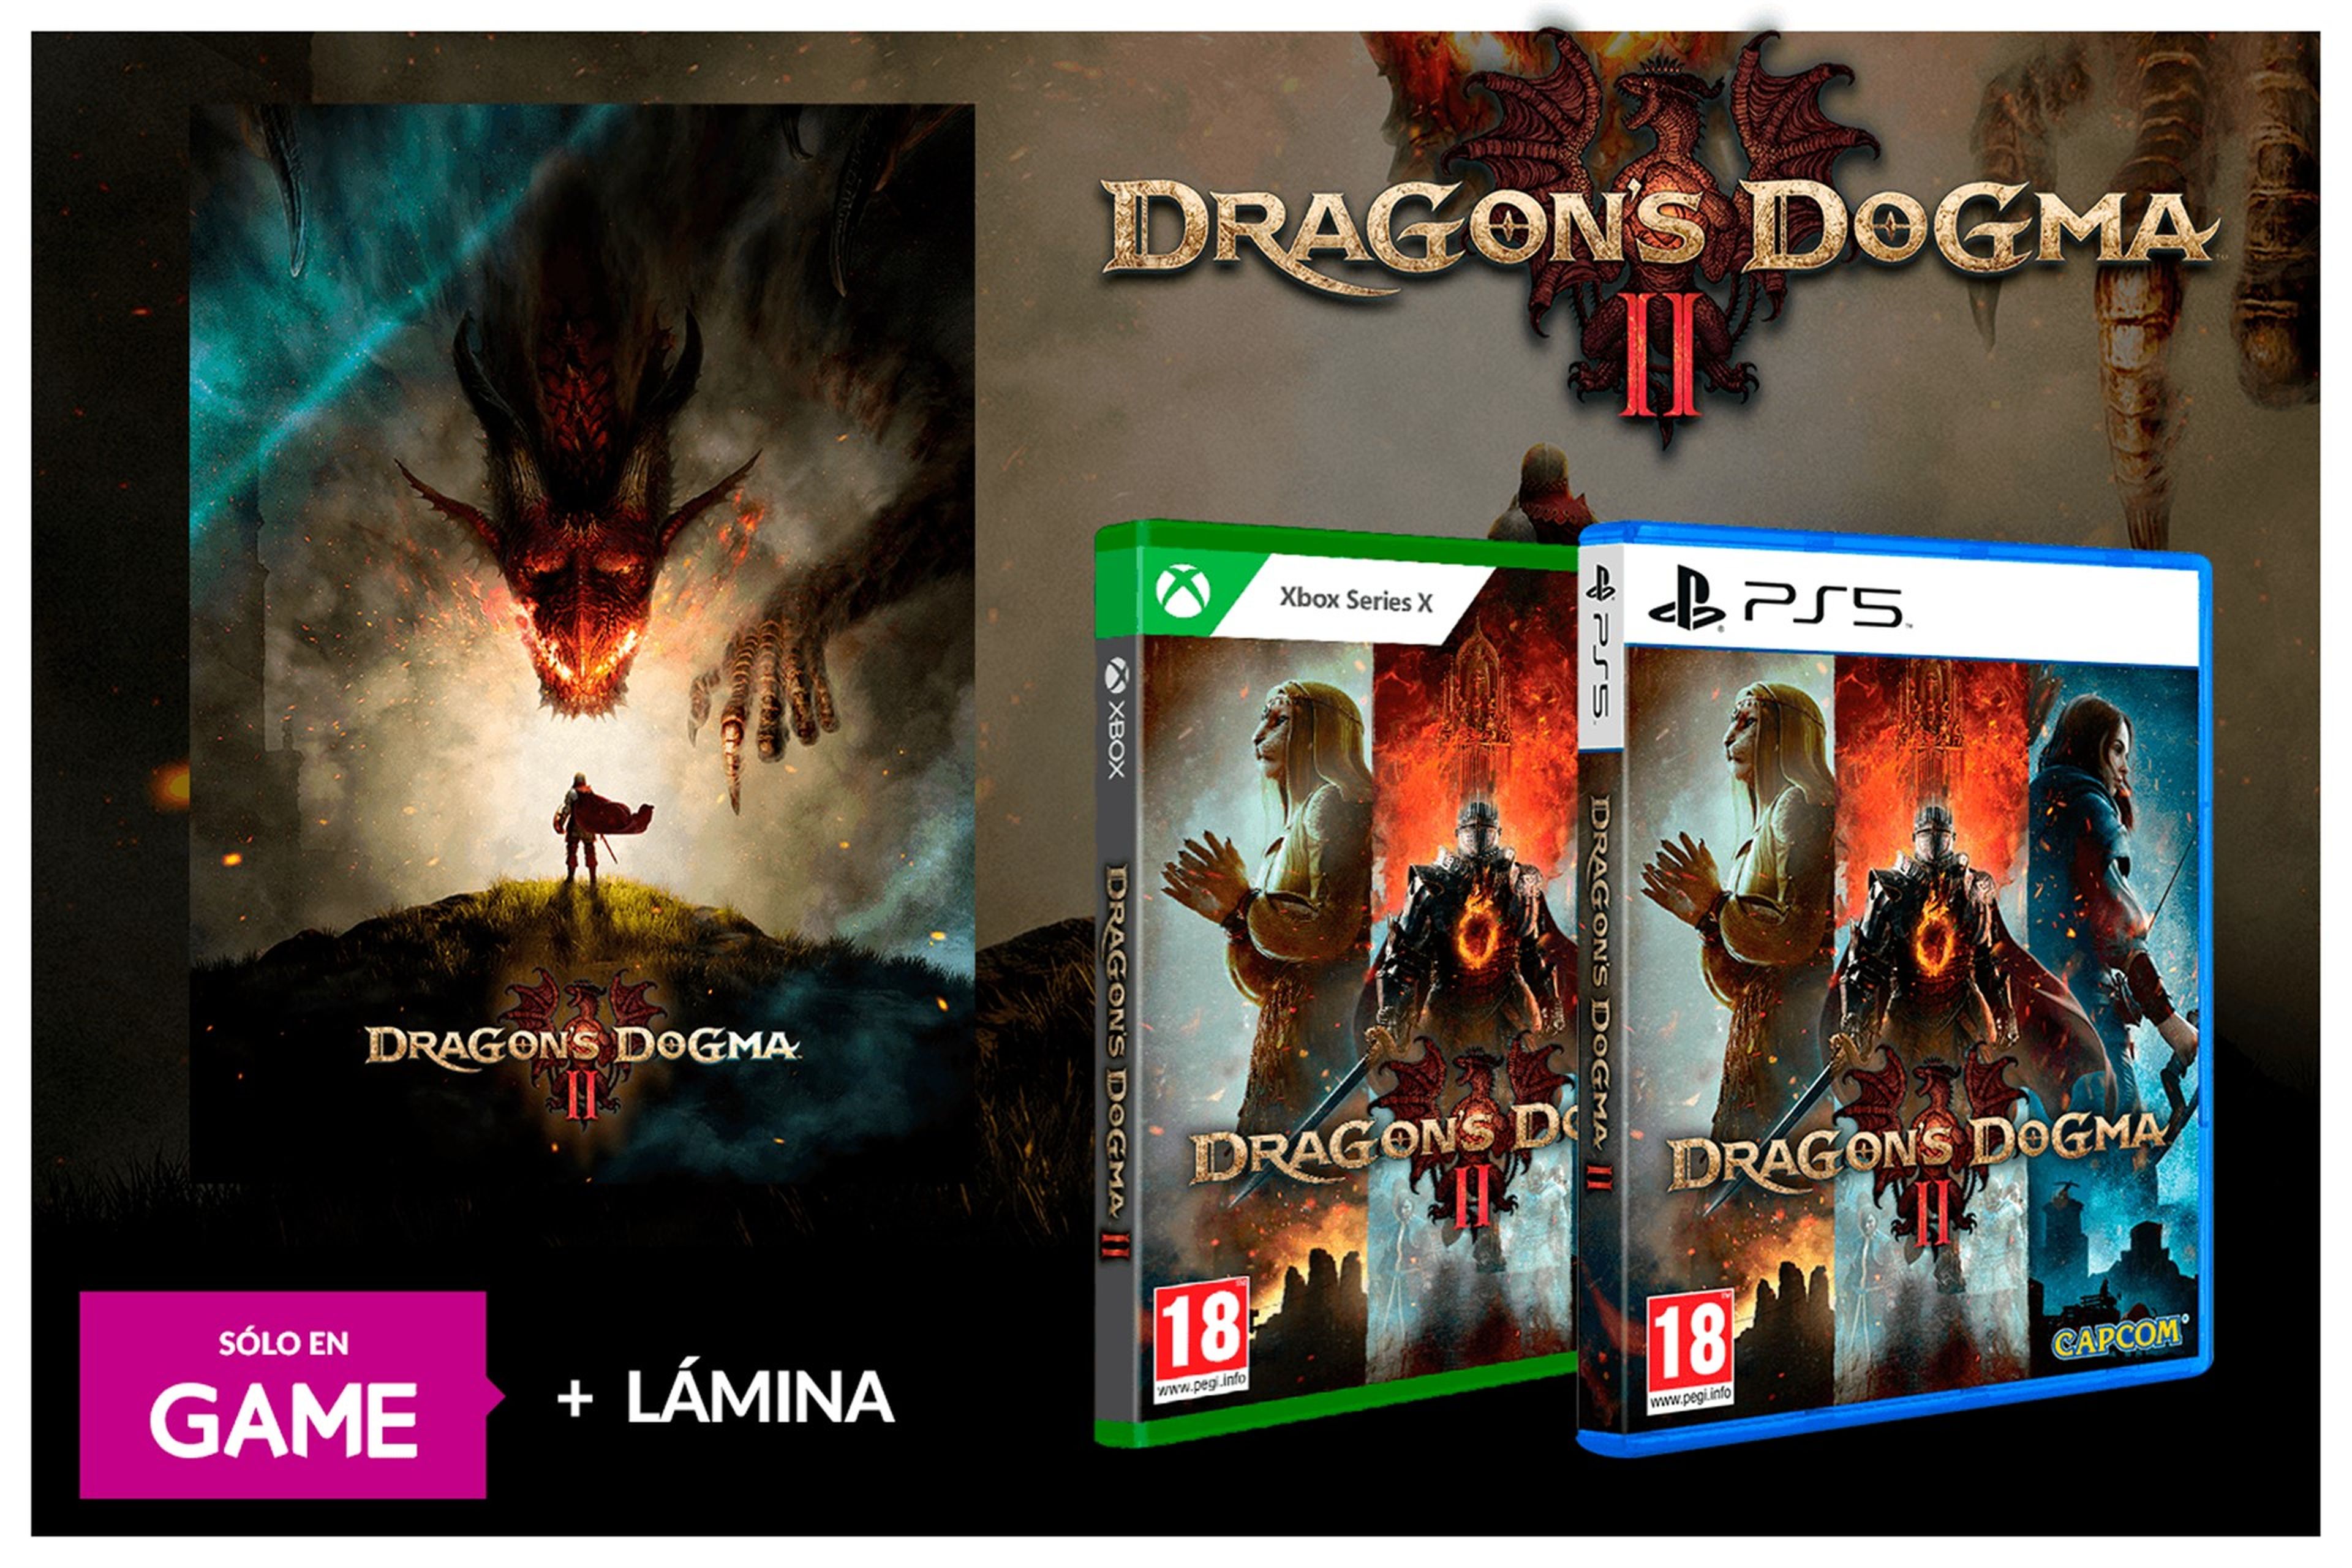 Reservar Dragon's Dogma II en GAME con lámina exclusiva de regalo